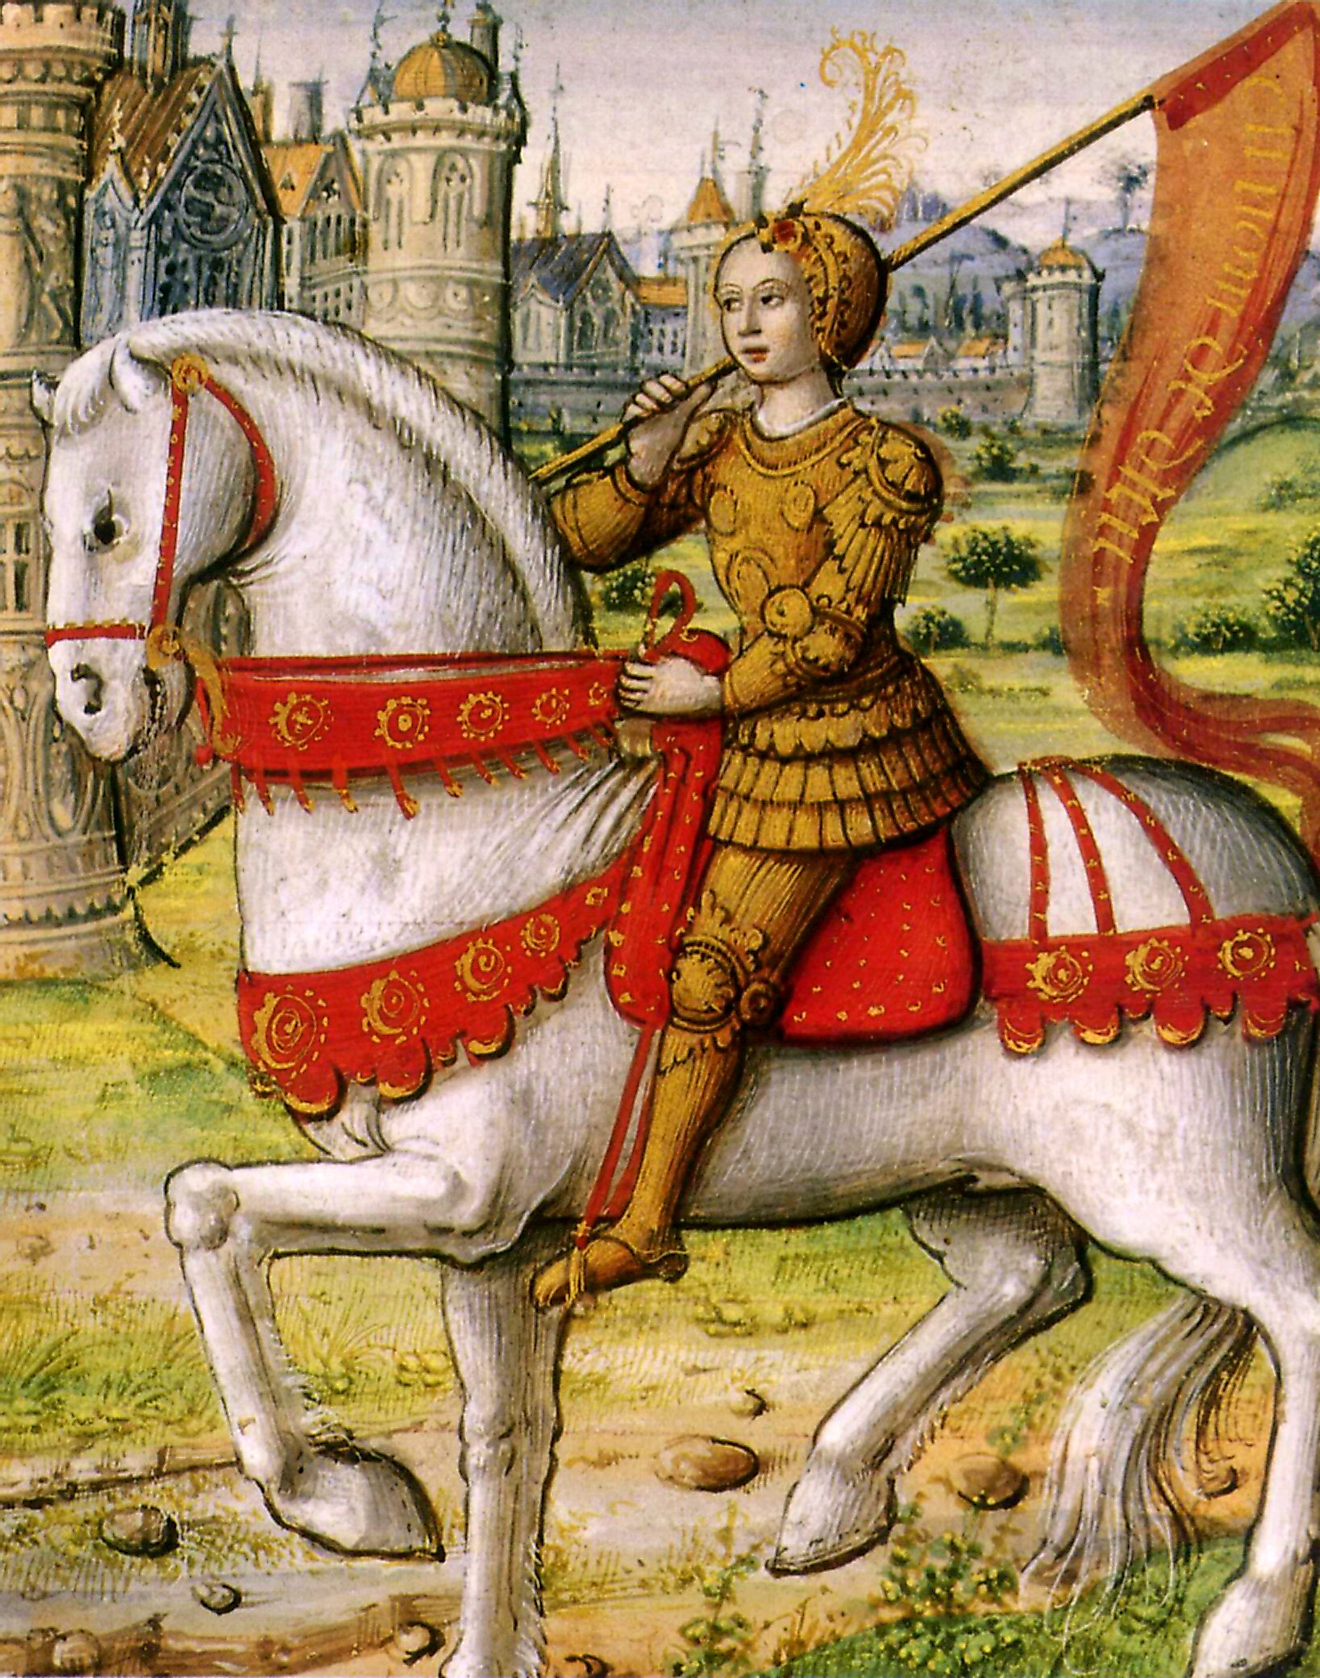 Joan of Arc depicted on horseback in an illustration from a 1504 manuscript. Image credit: Musée Dobrée / Public domain